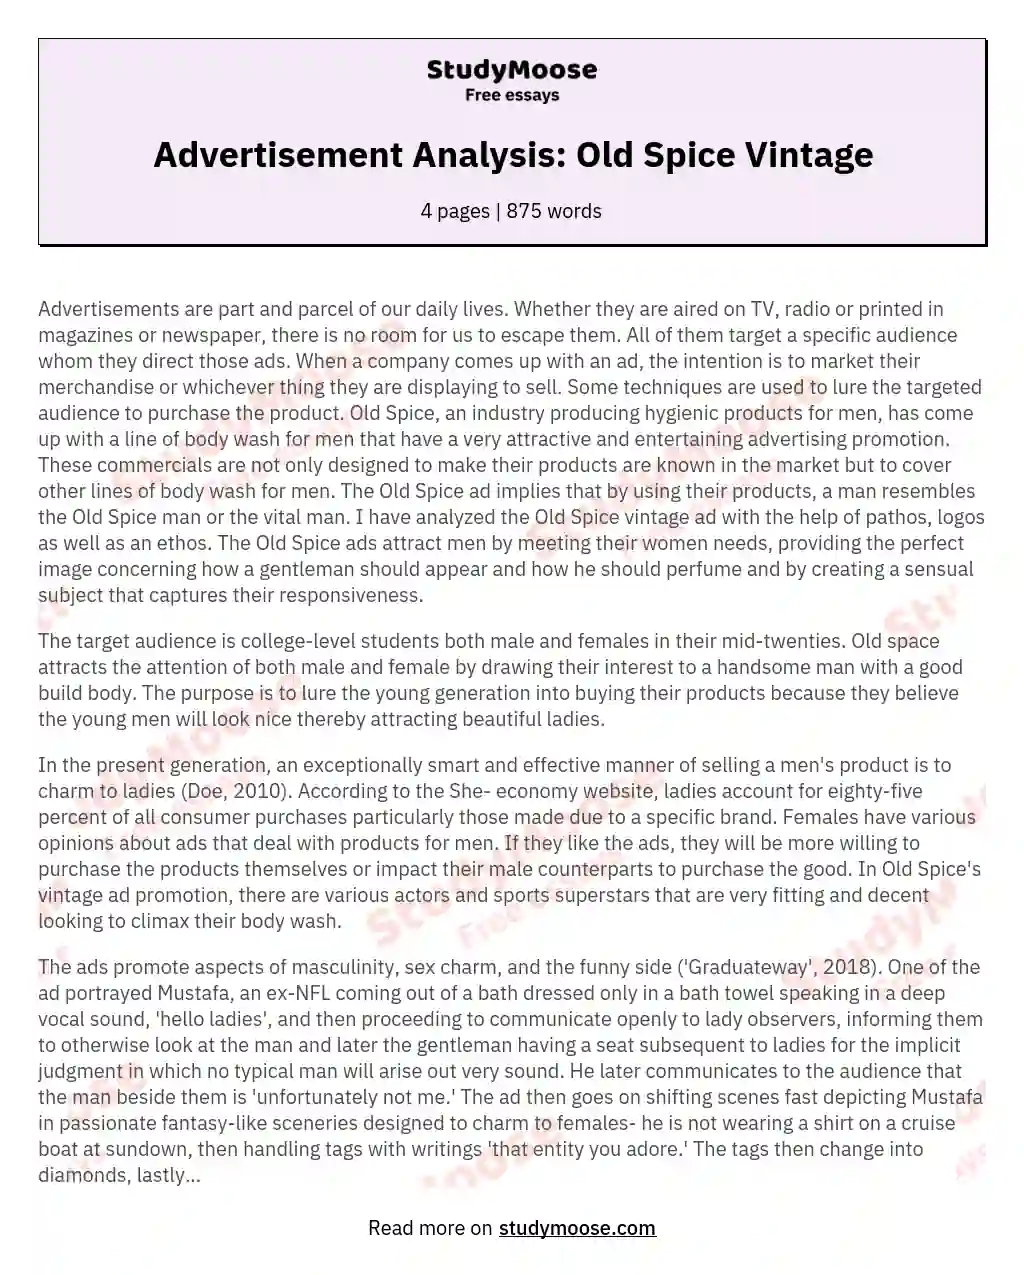 Advertisement Analysis: Old Spice Vintage essay